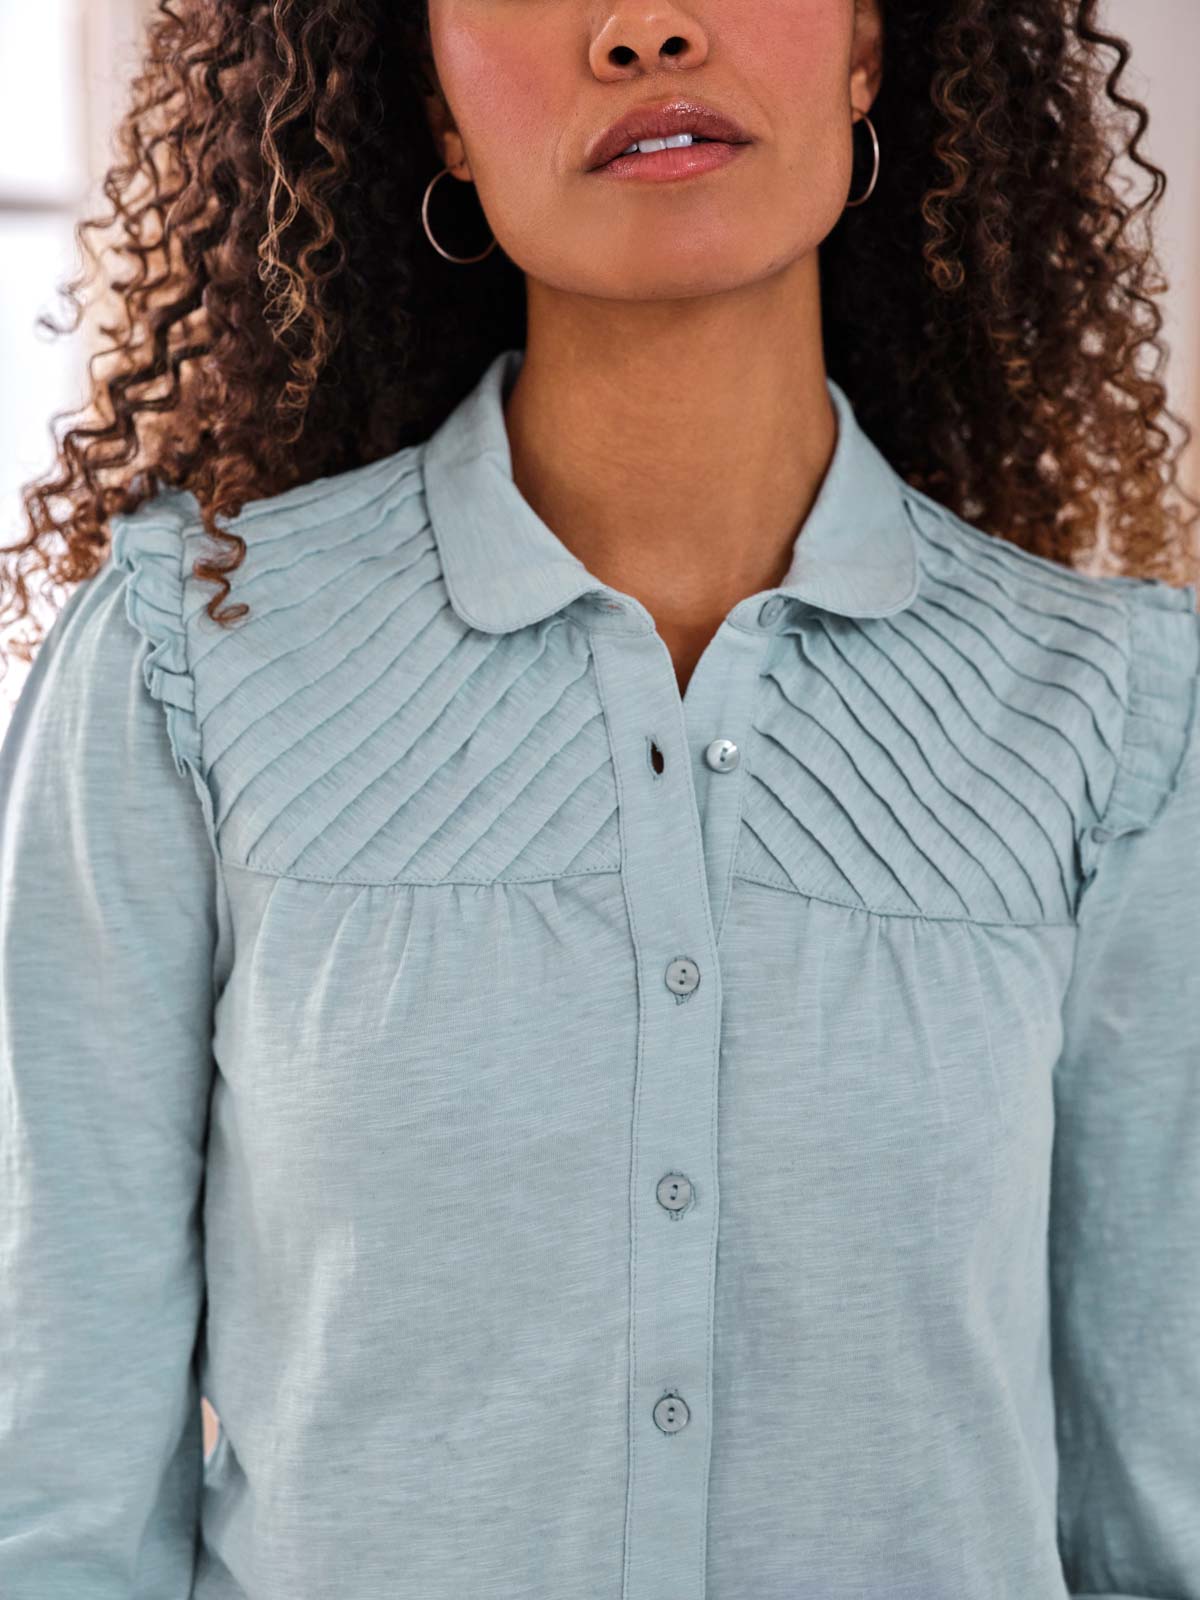 Beca Fairtrade Organic Cotton Pin Tuck Shirt - Chambray Blue